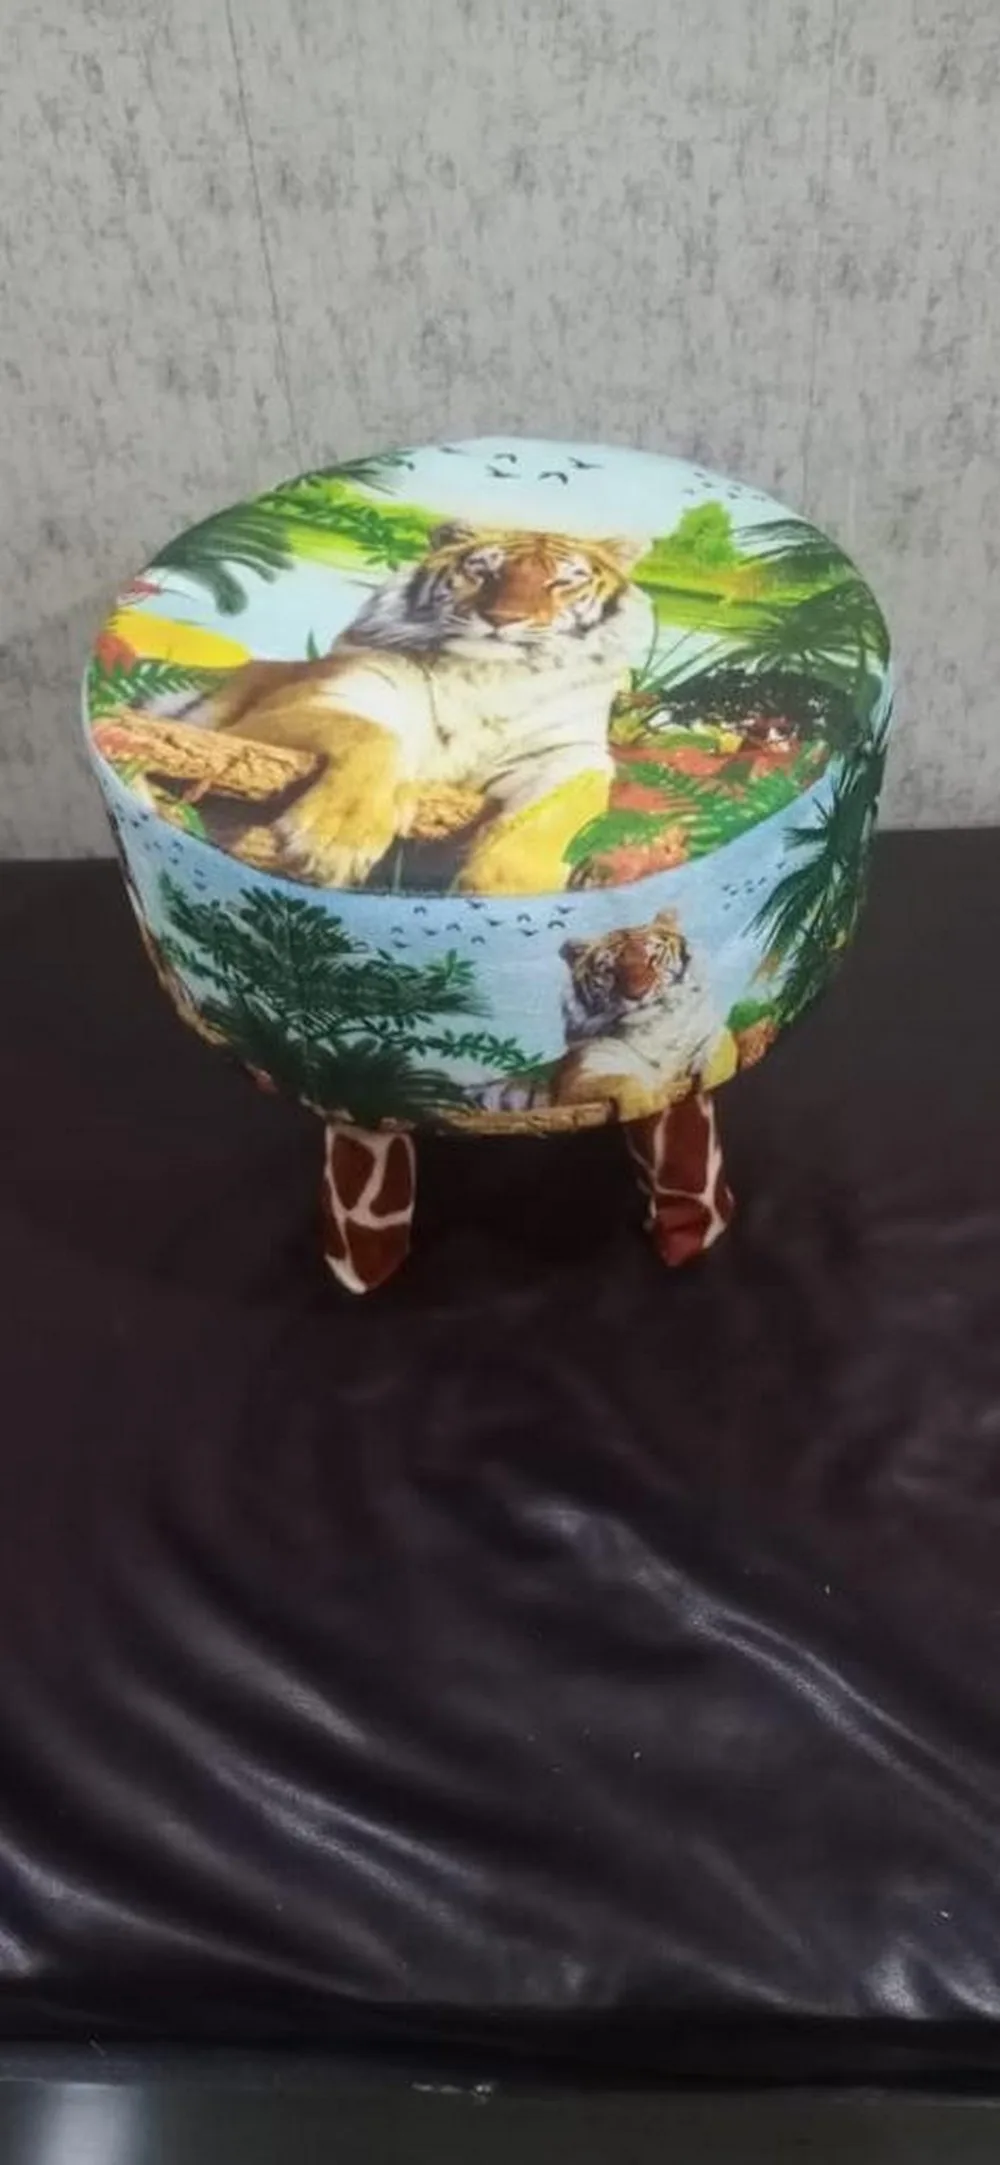 Cartoon printed stool kids, 12 inch with box, Tiger